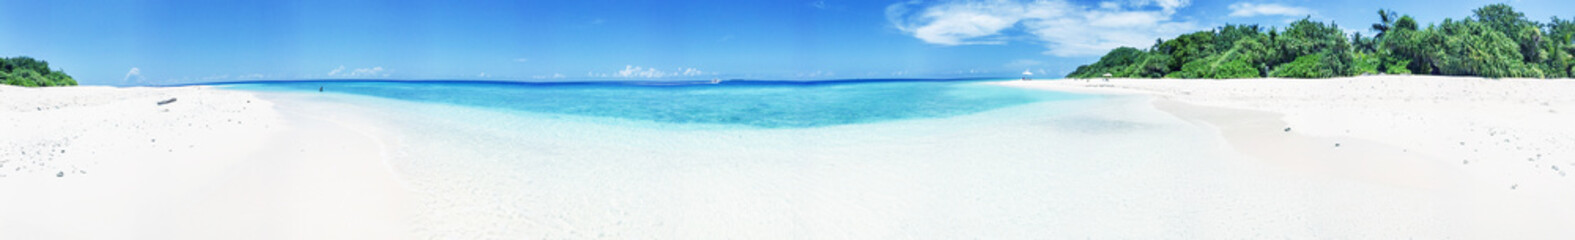 Panoramic view of Maldivian Sea and Island